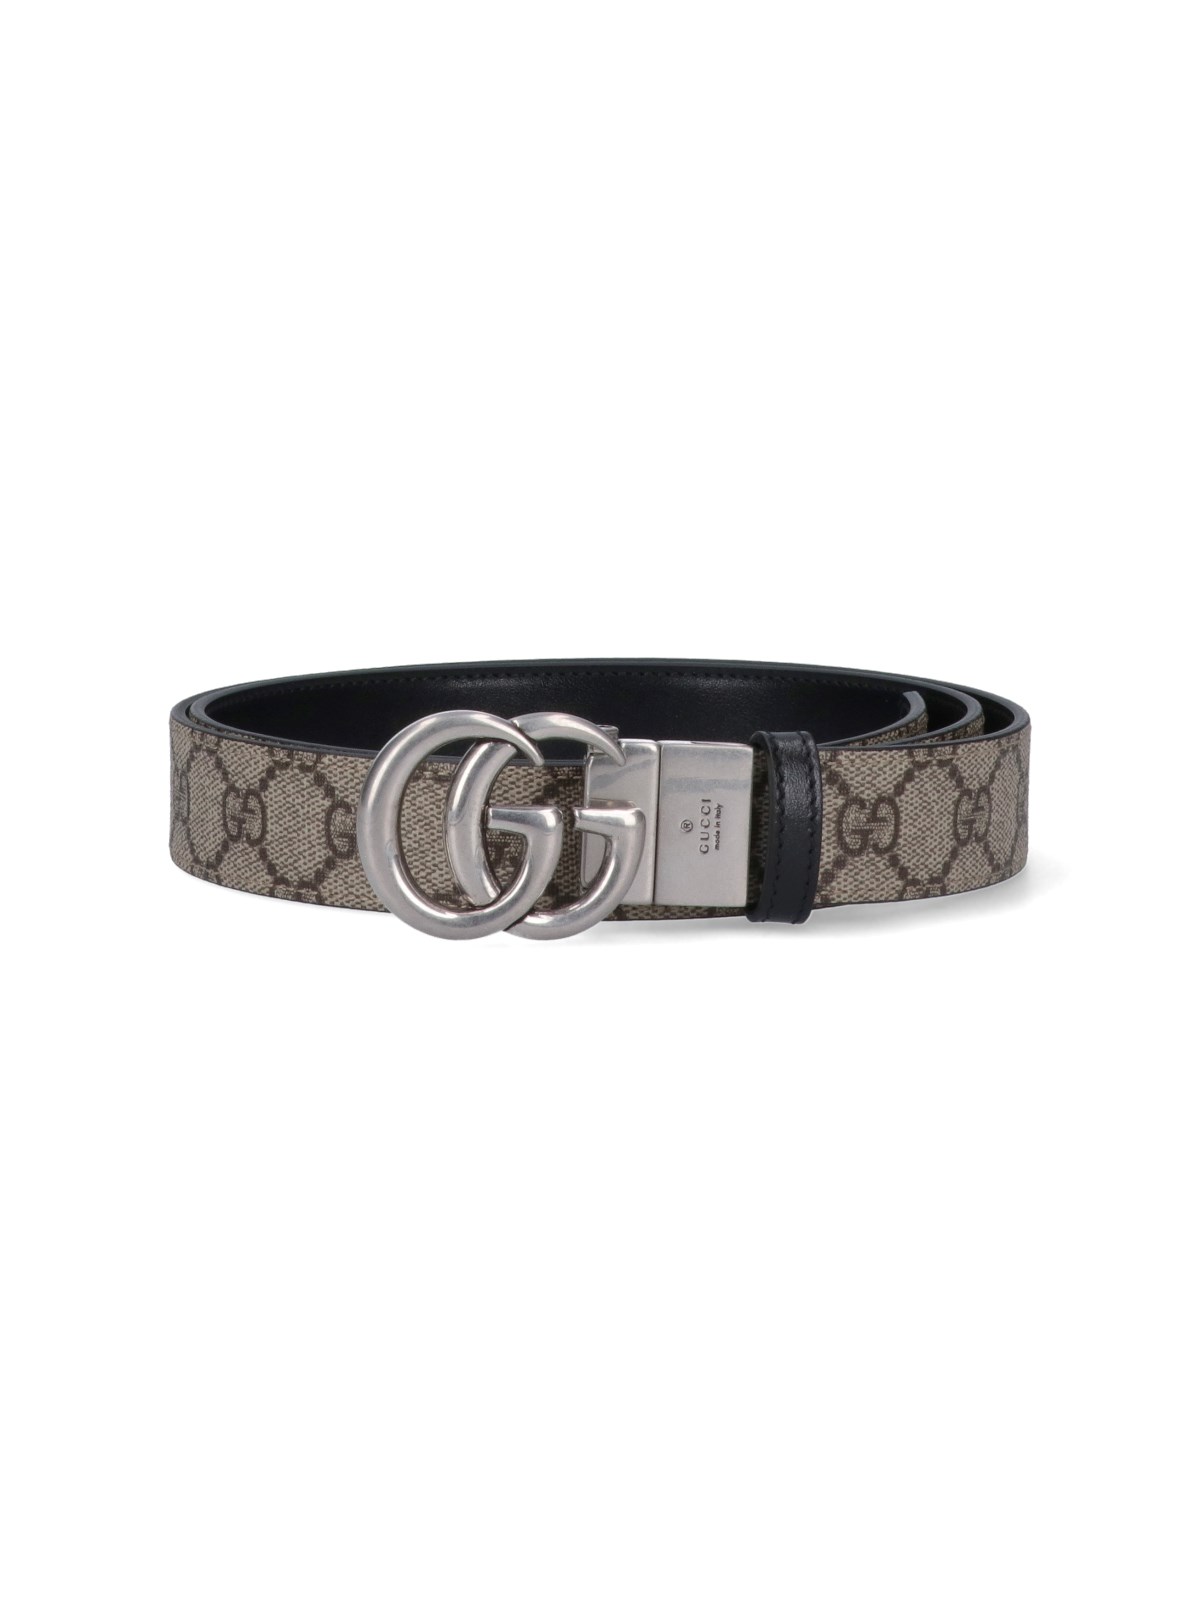 GG Marmont Supreme Canvas Belt in Beige - Gucci